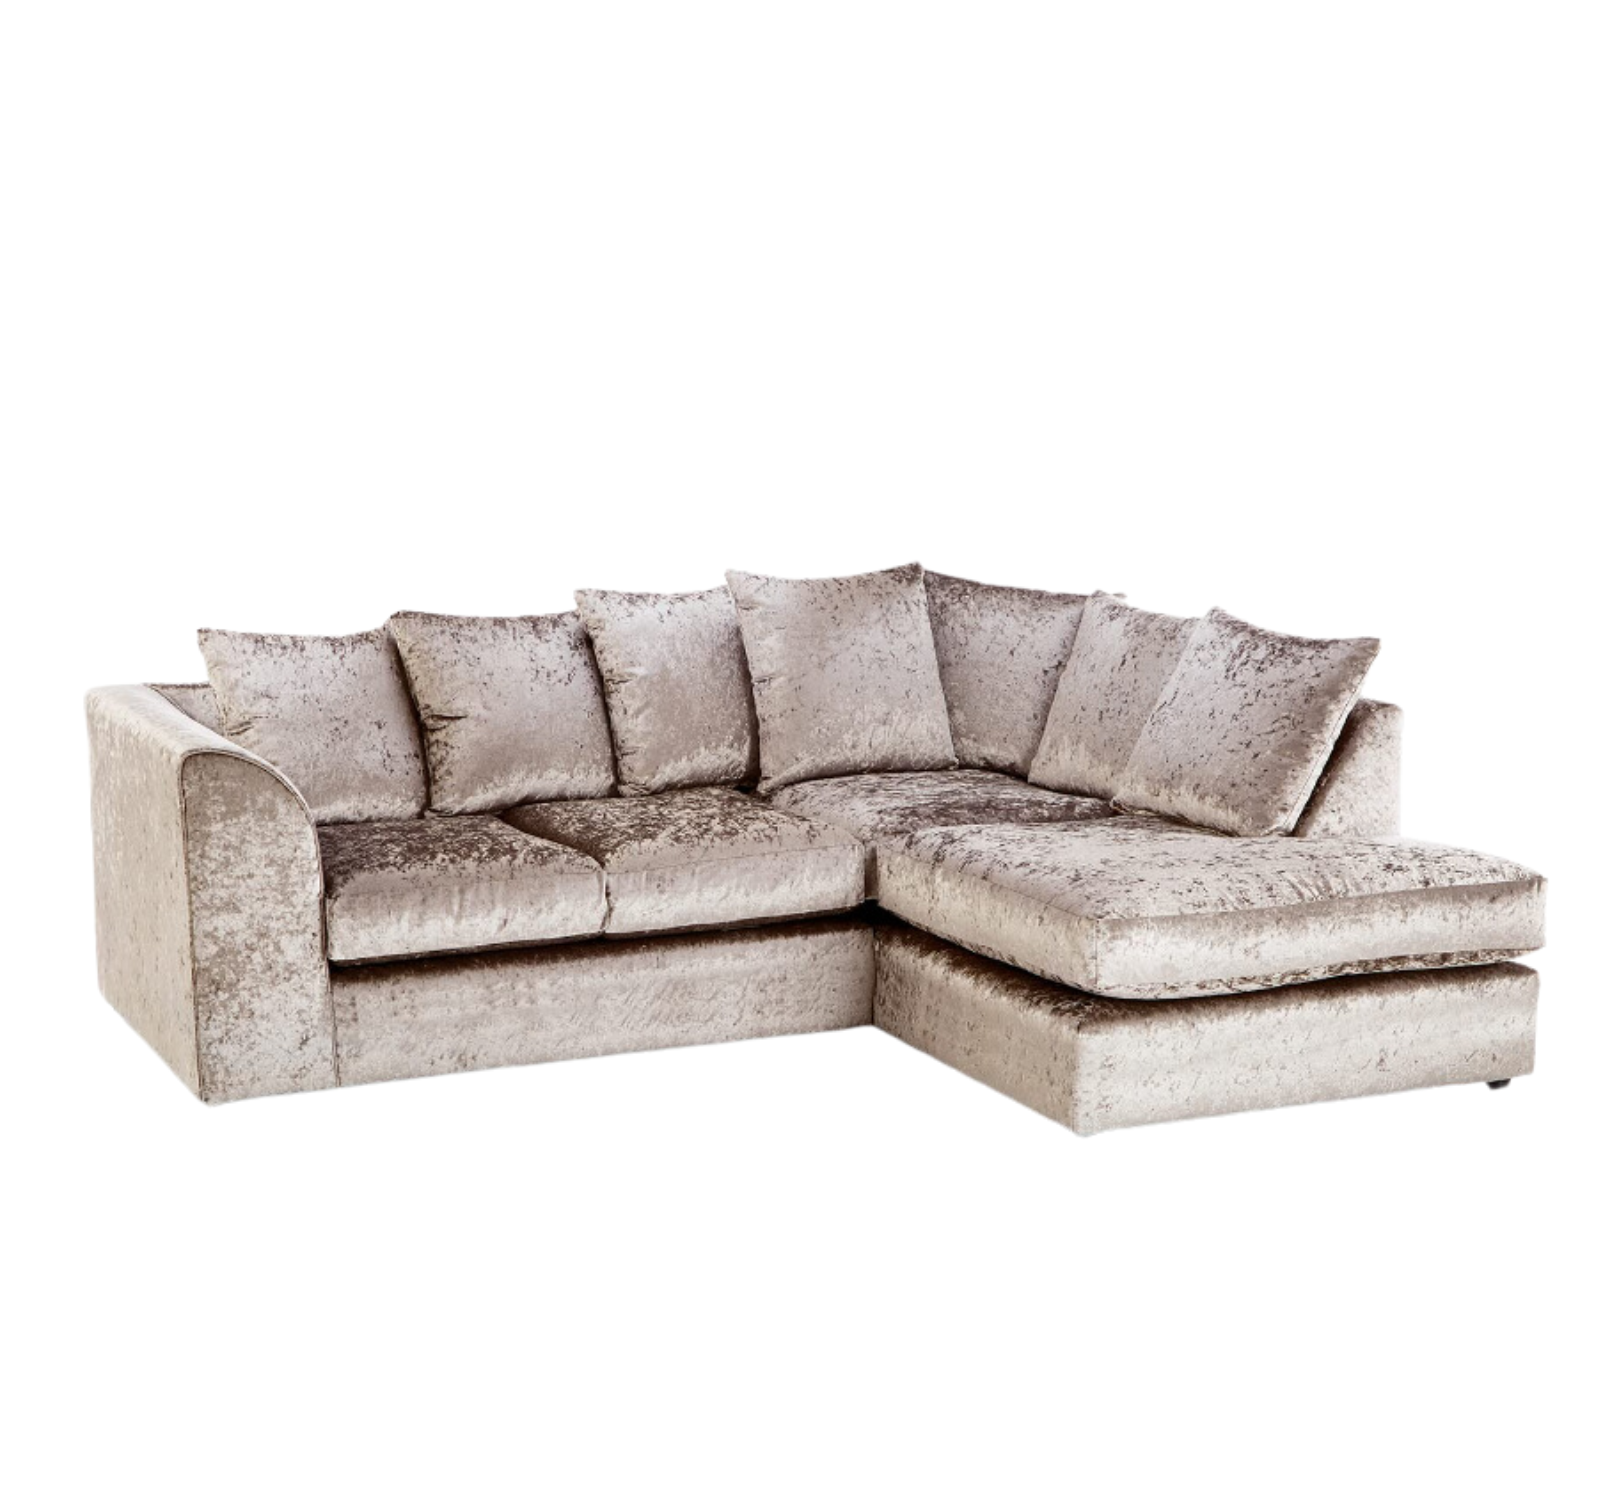 Elegant Crushed Velvet 4-Seater Corner Sofa, Luxurious Comfort for Your Living Space (Scatter Back)